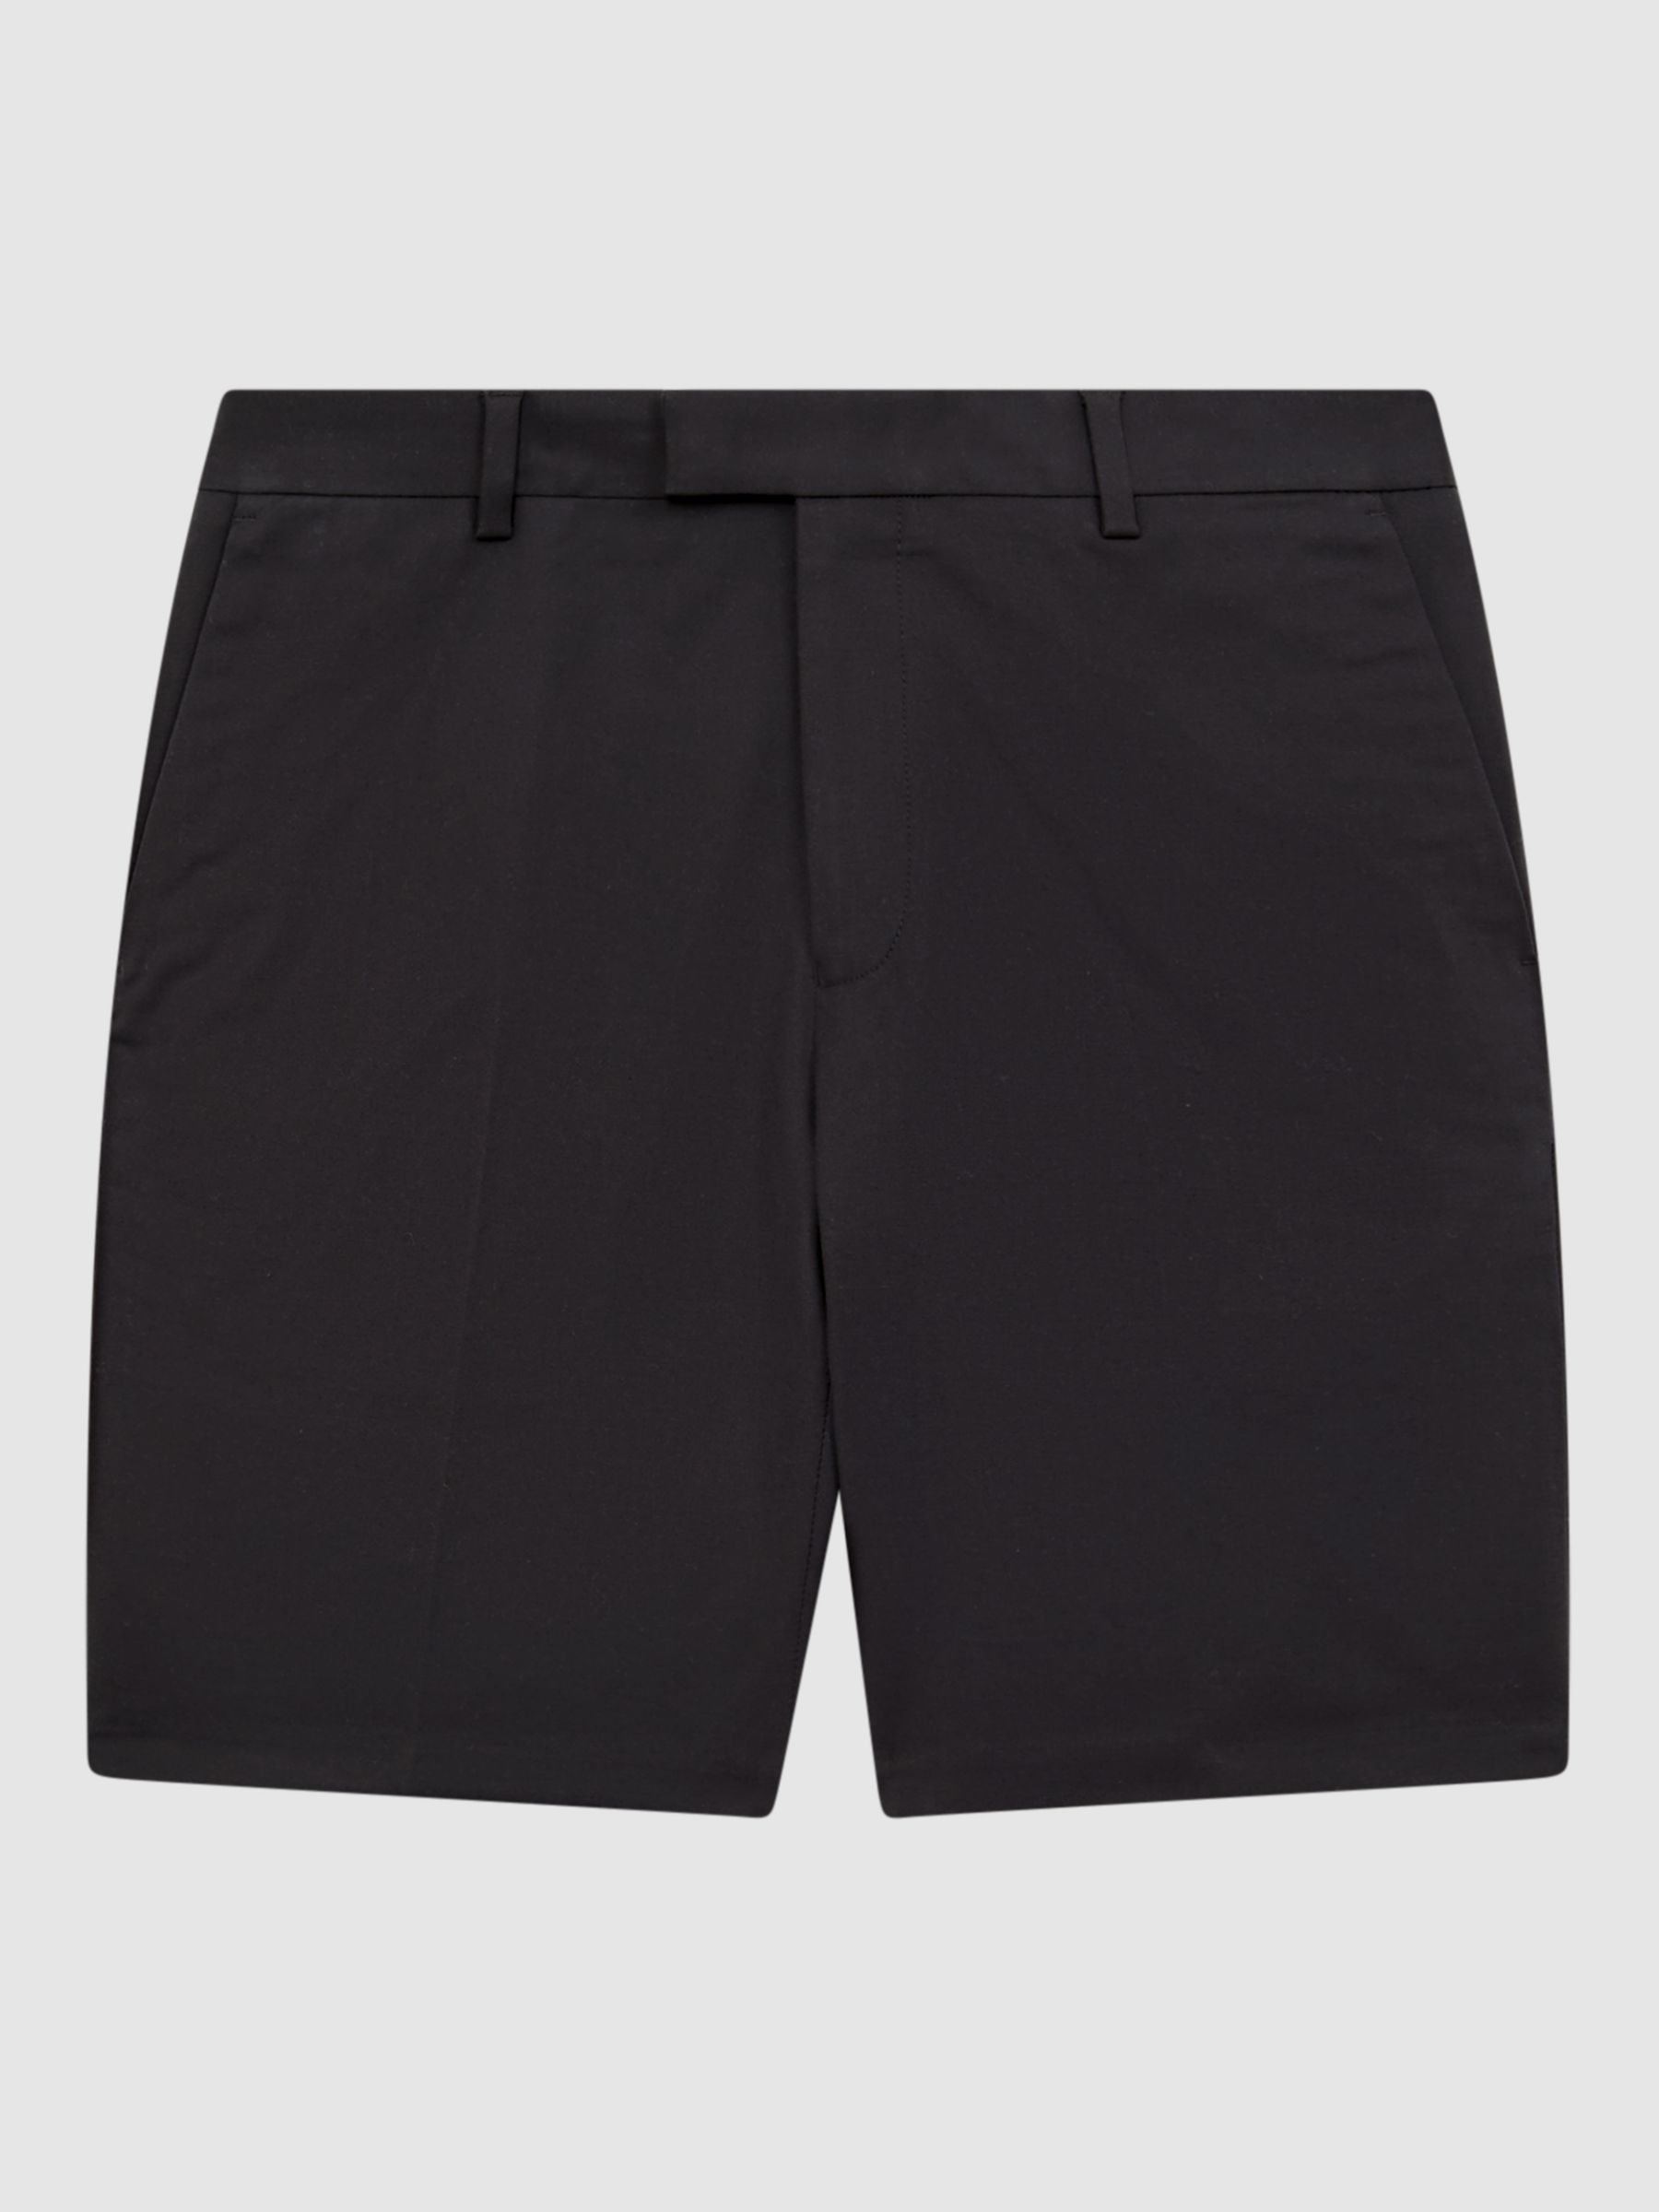 Reiss Southbury Casual Chino Shorts, Slate Blue, 28R